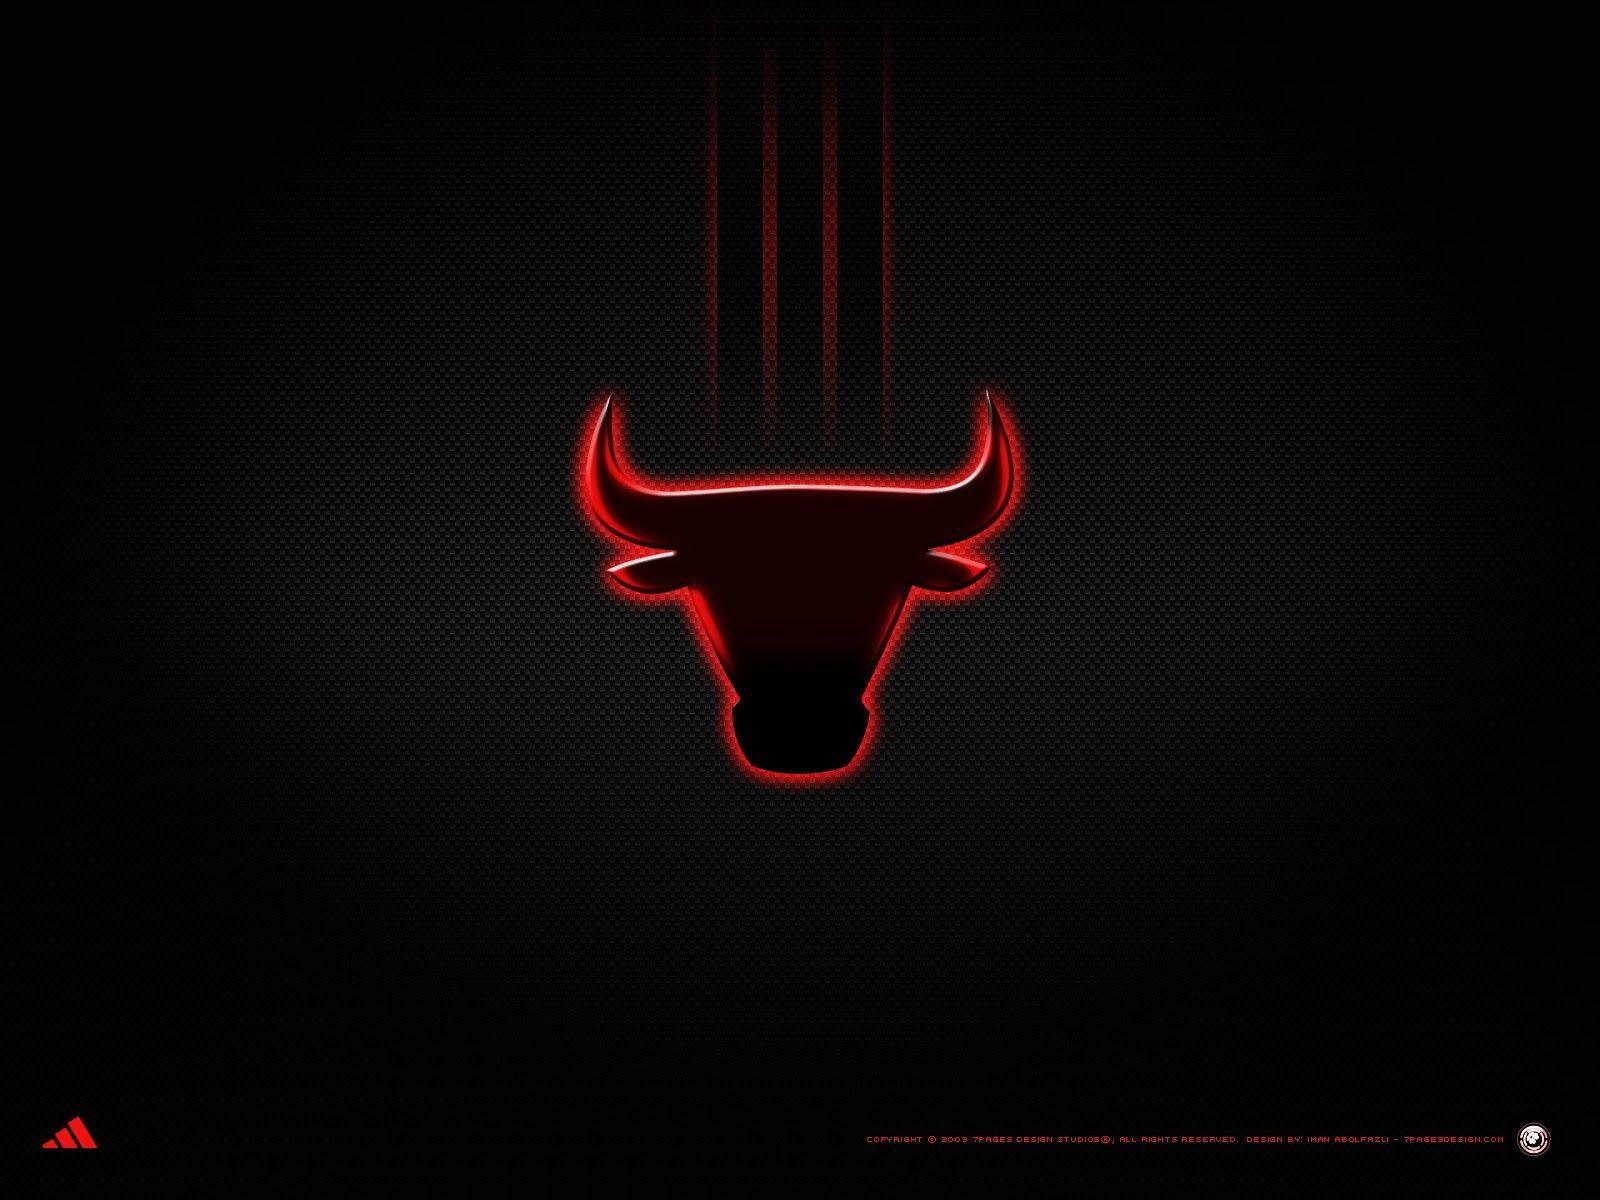 Black Bulls Logo Wallpaper Free .wallpaperaccess.com